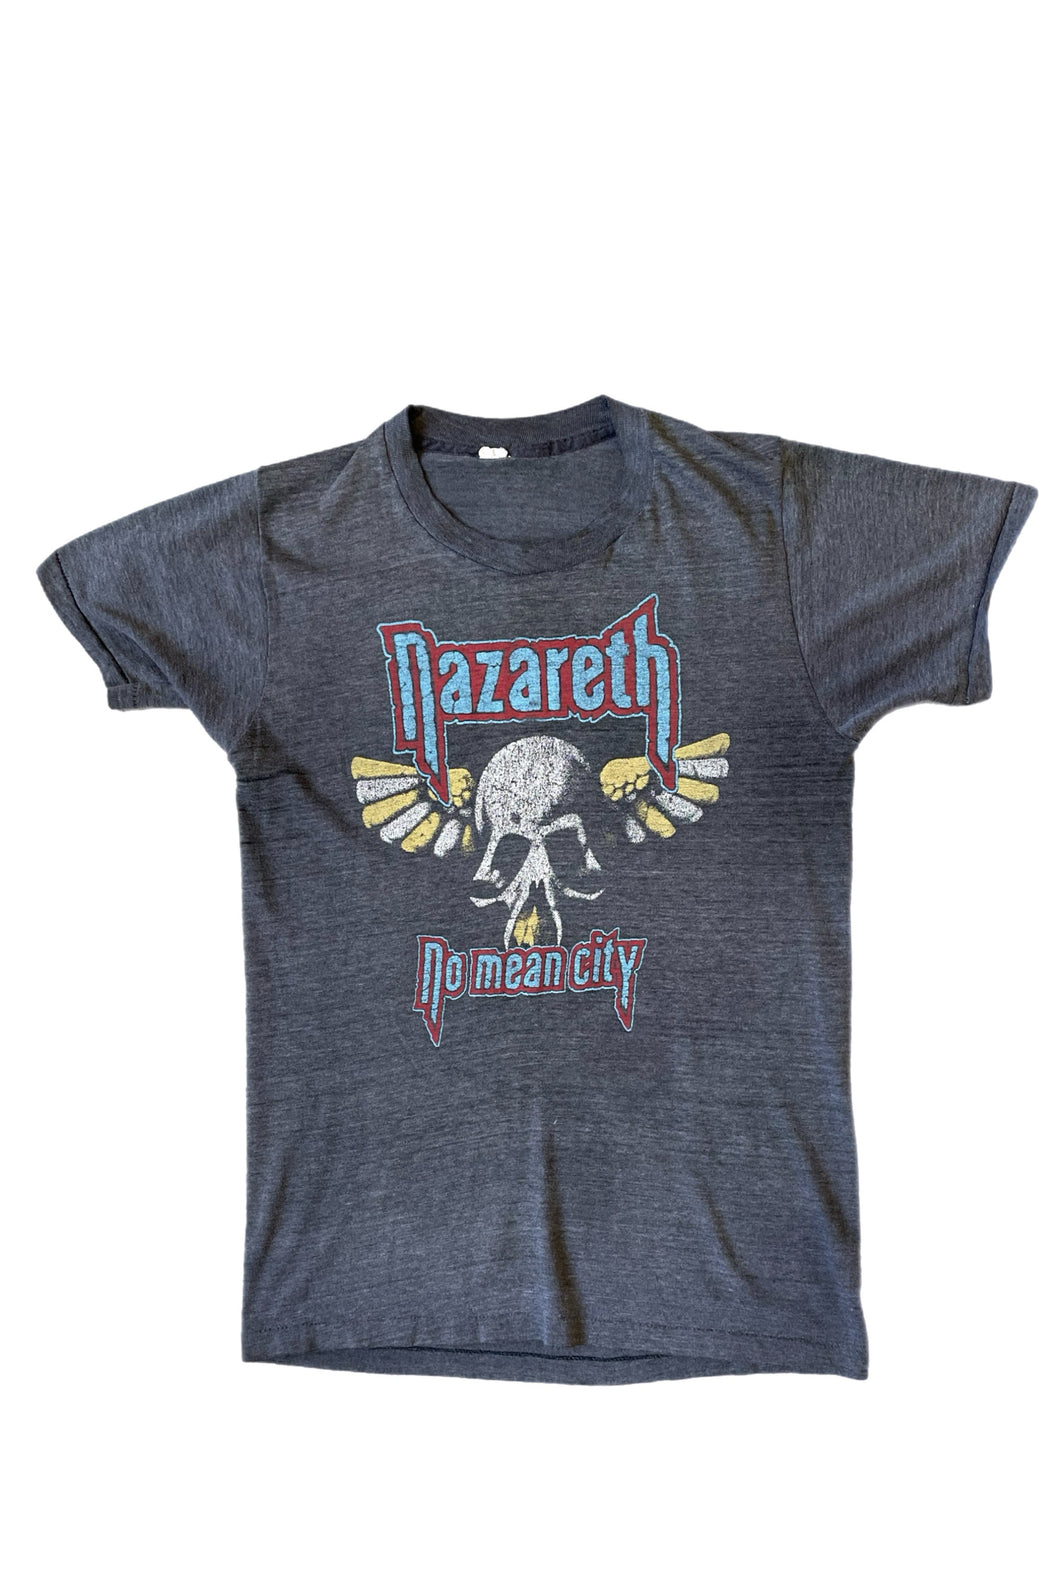 Vintage 1980's Nazareth Tour T-Shirt